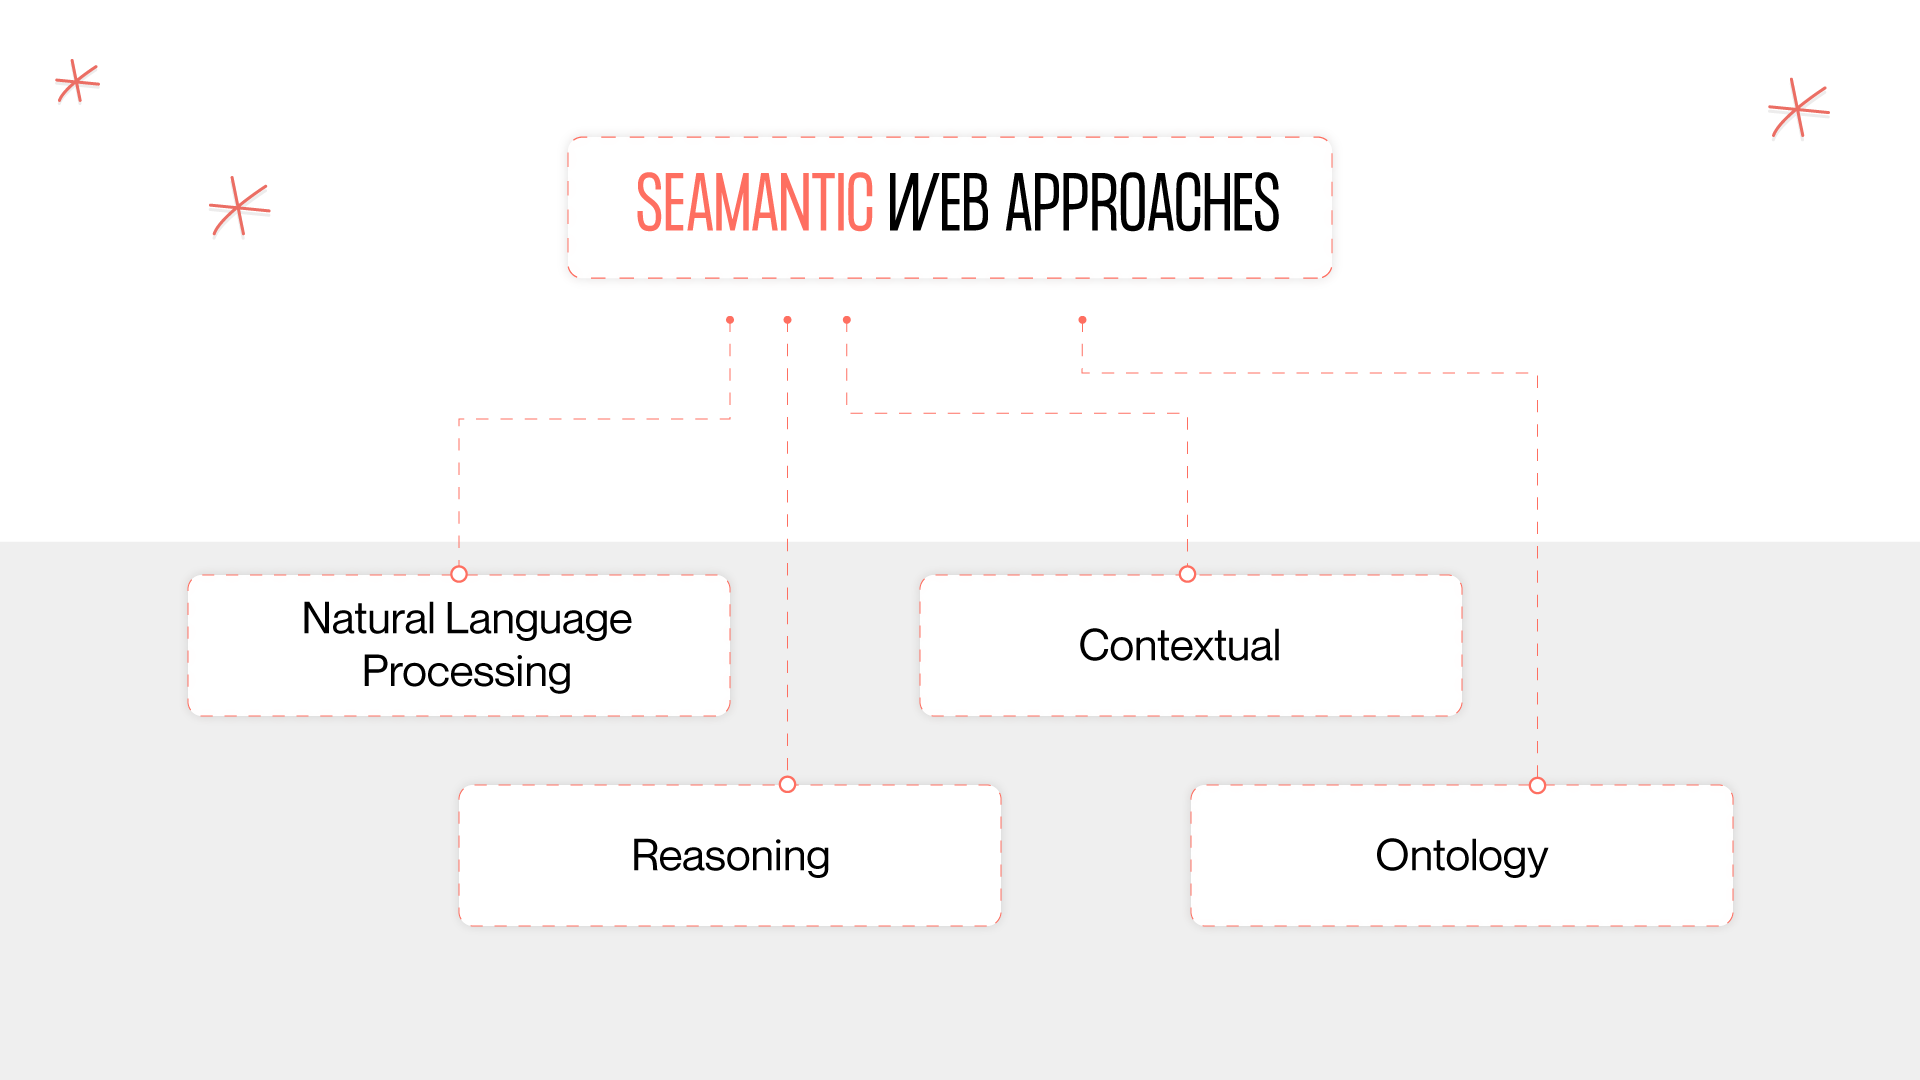 Website optimization for the semantic web 3.0